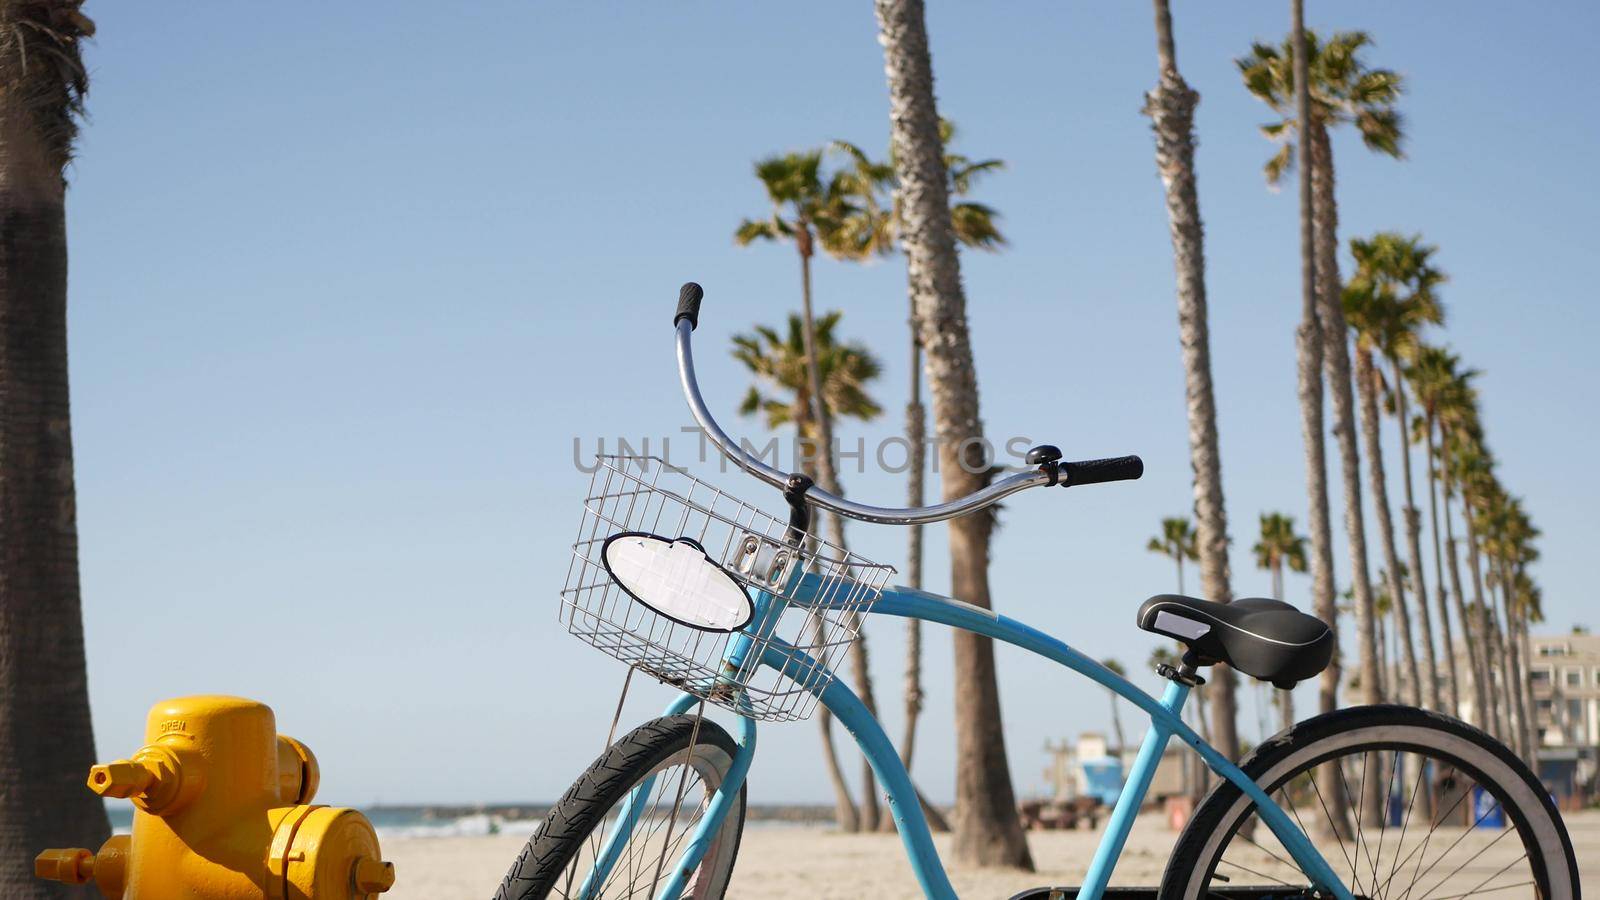 Bicycle cruiser bike by ocean beach, California coast USA. Summer cycle, lifeguard hut and palm tree by DogoraSun